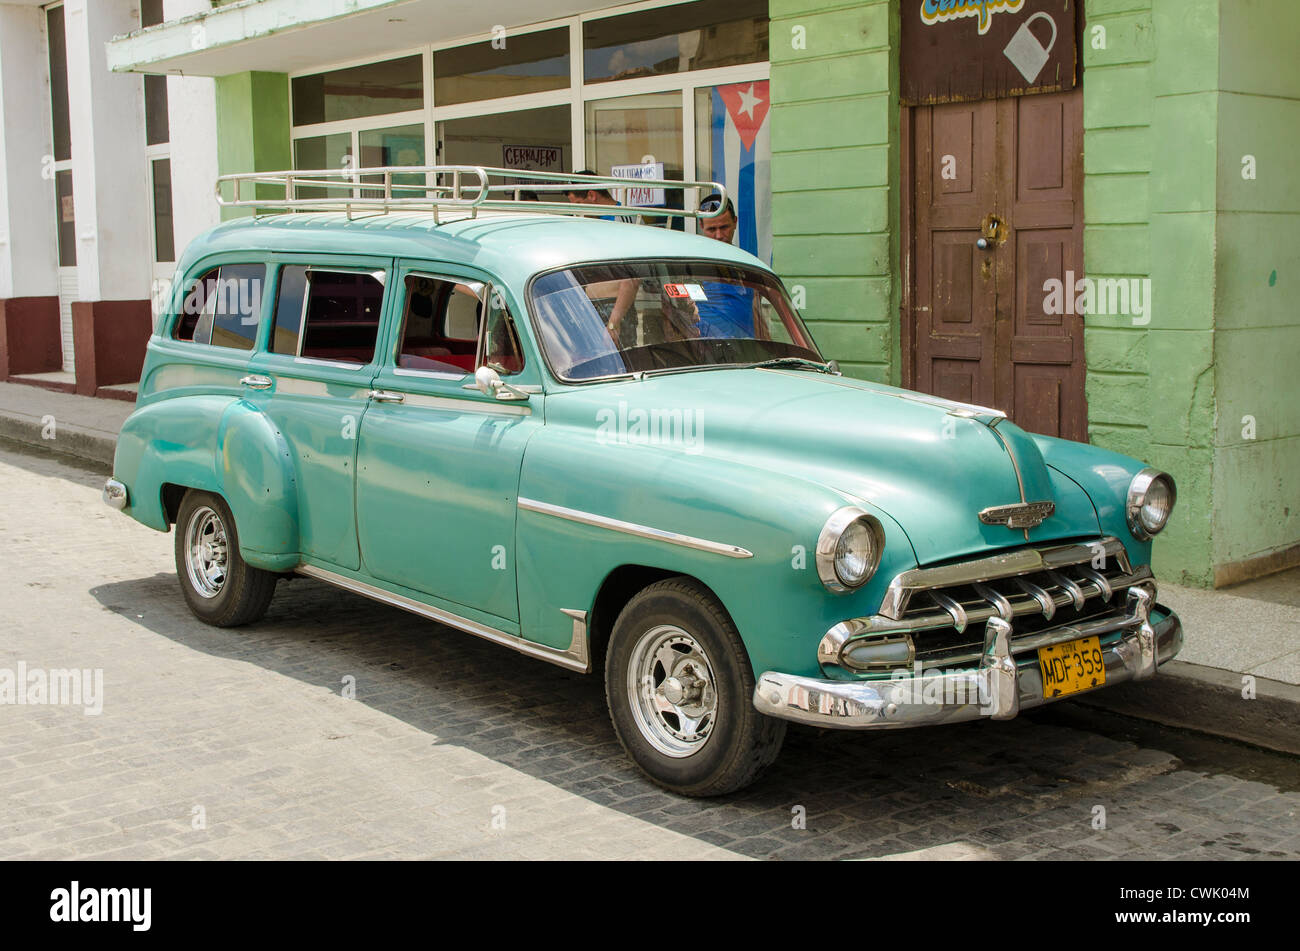 Antique 1952 Chevrolet station wagon car, Santa Clara, Cuba. Stock Photo